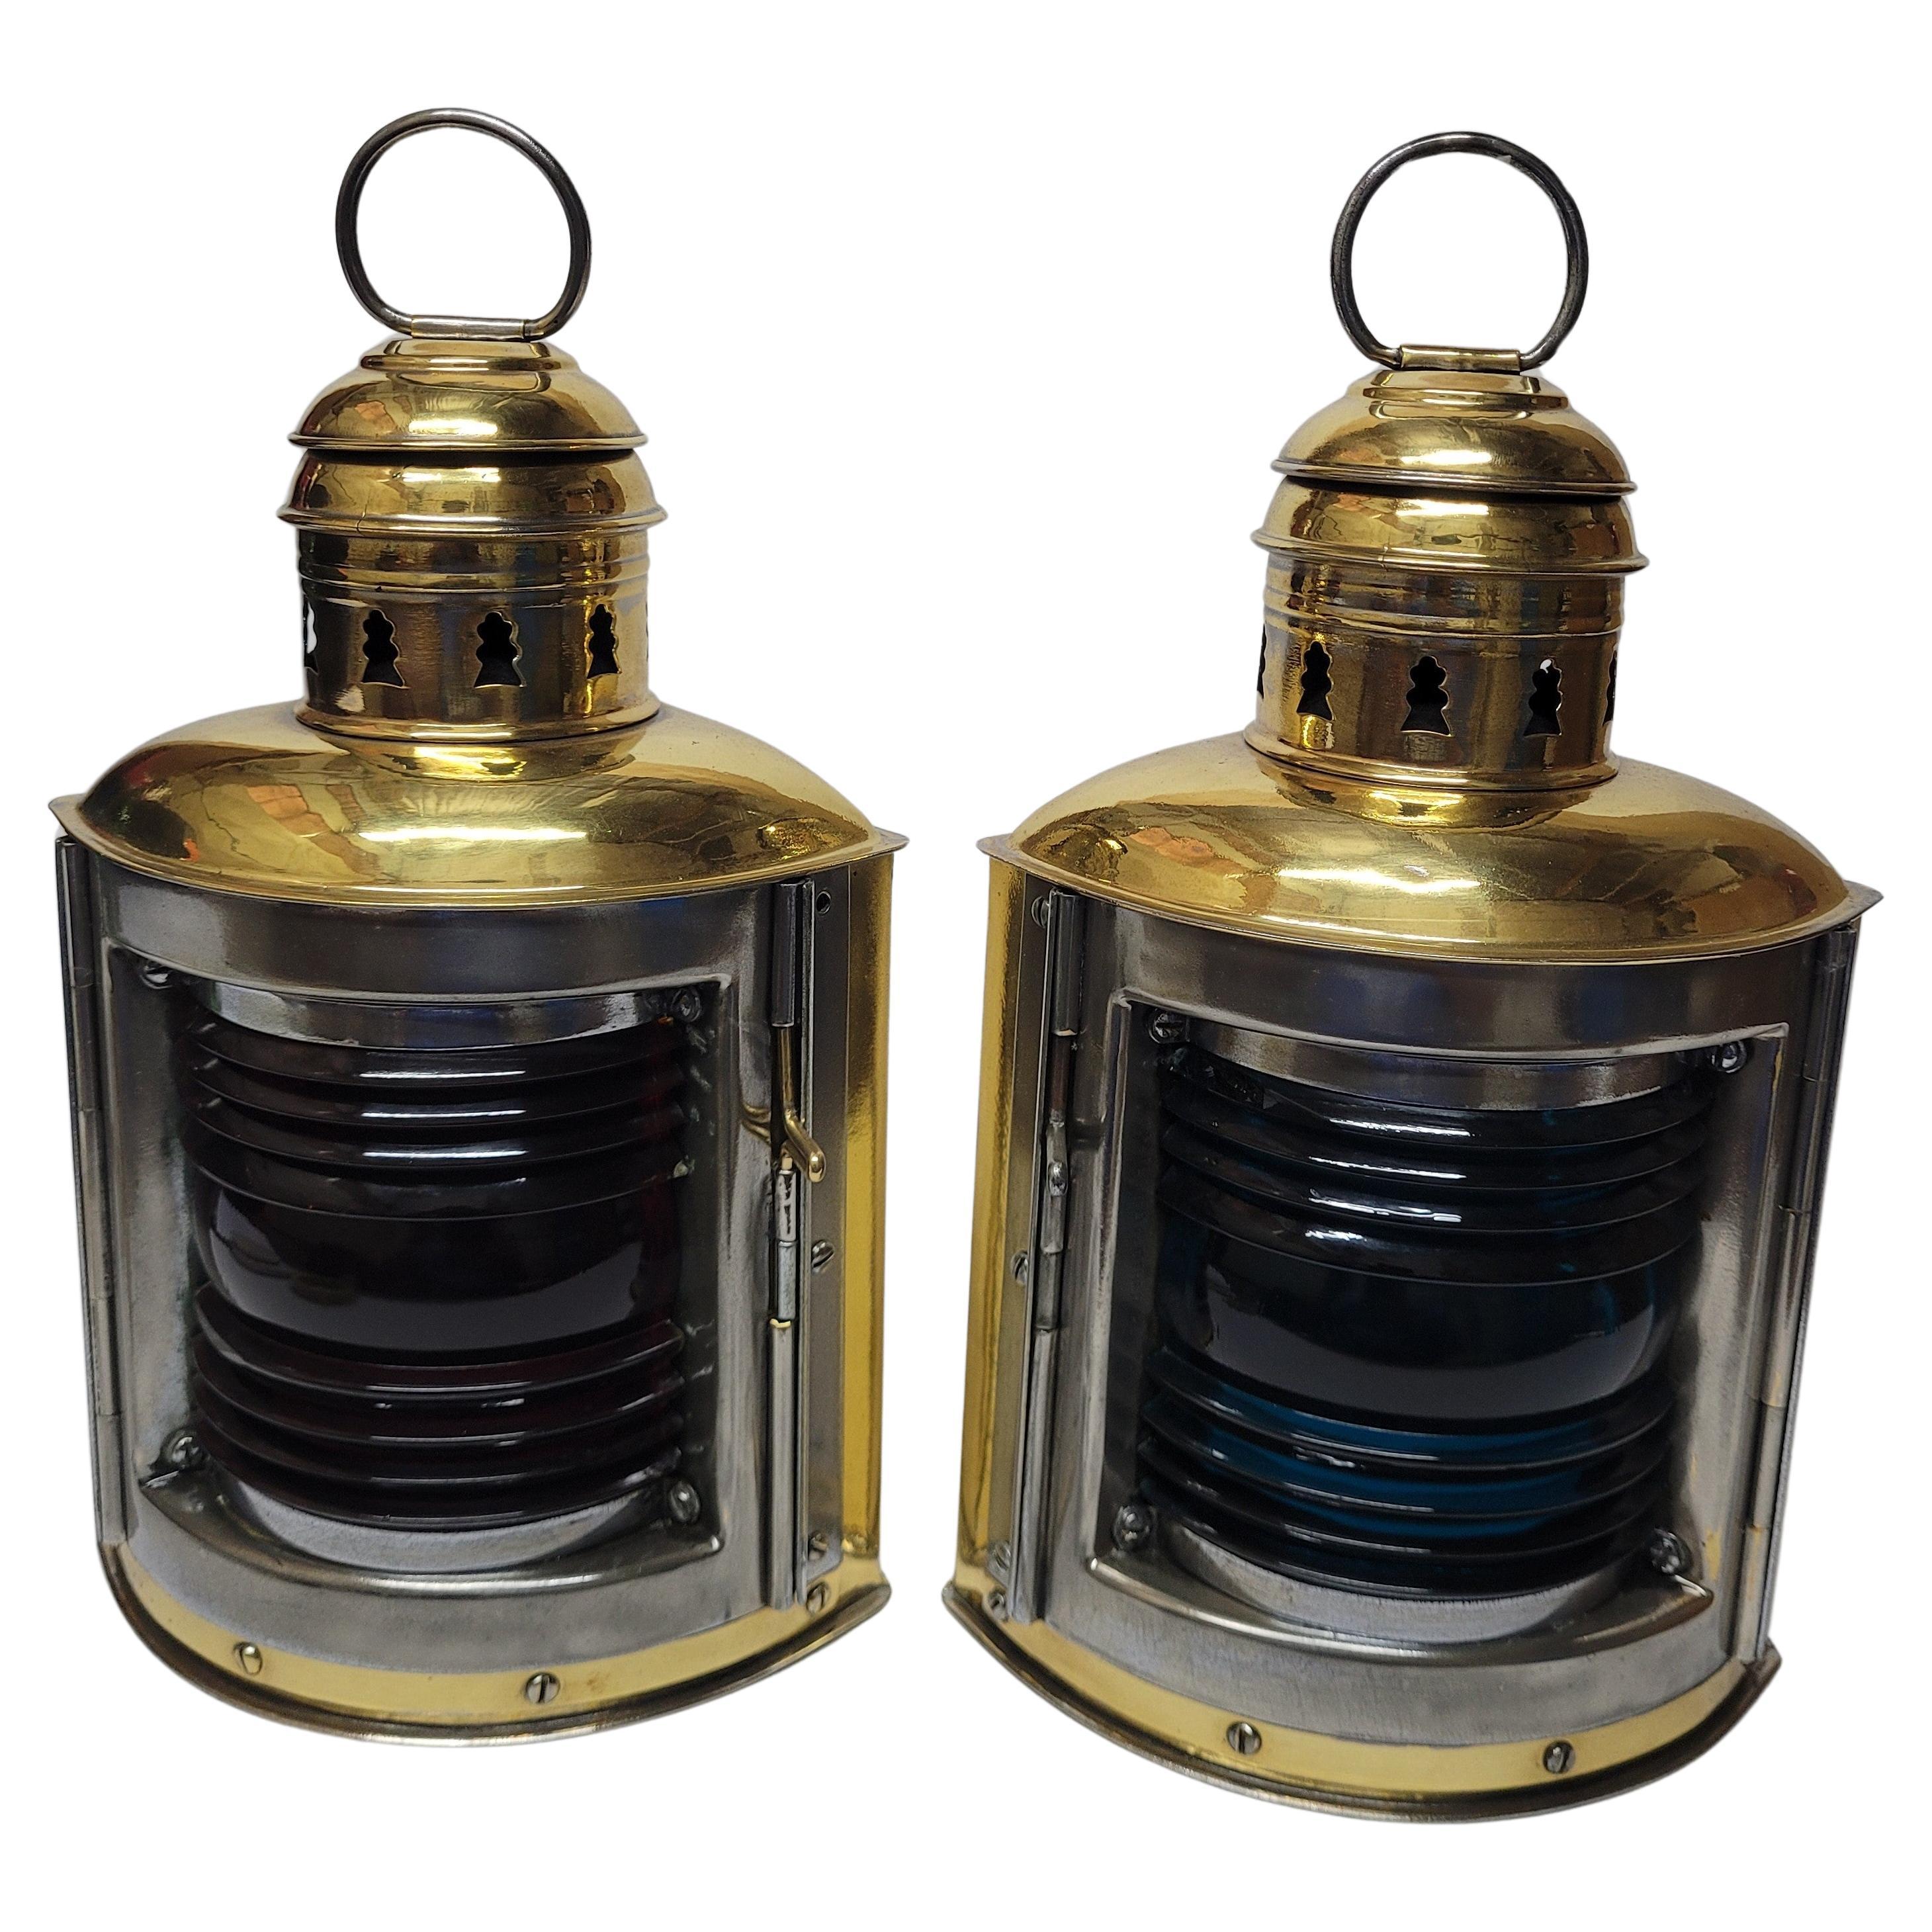 Solid Brass Boat Lanterns by Perko